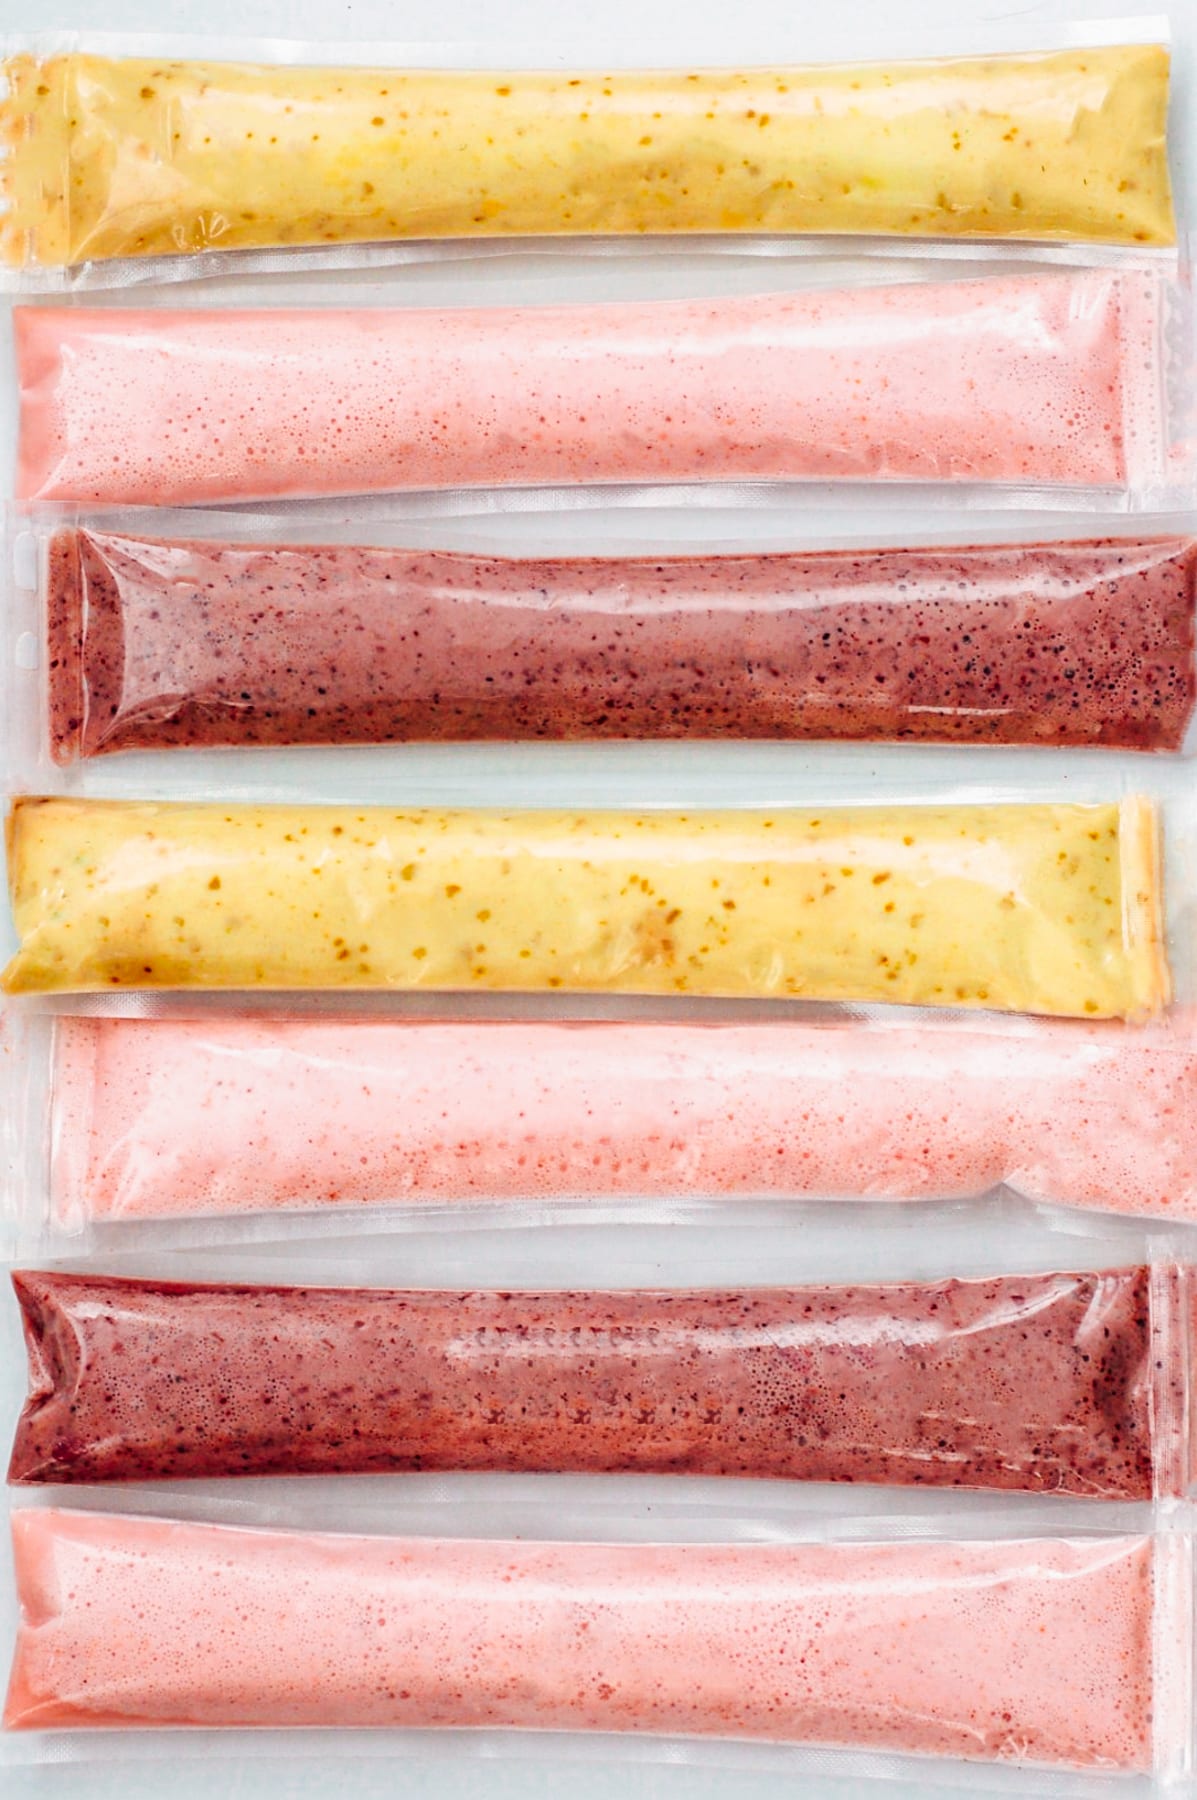 healthy kids school snack ideas: Yogurt tubes for school snack